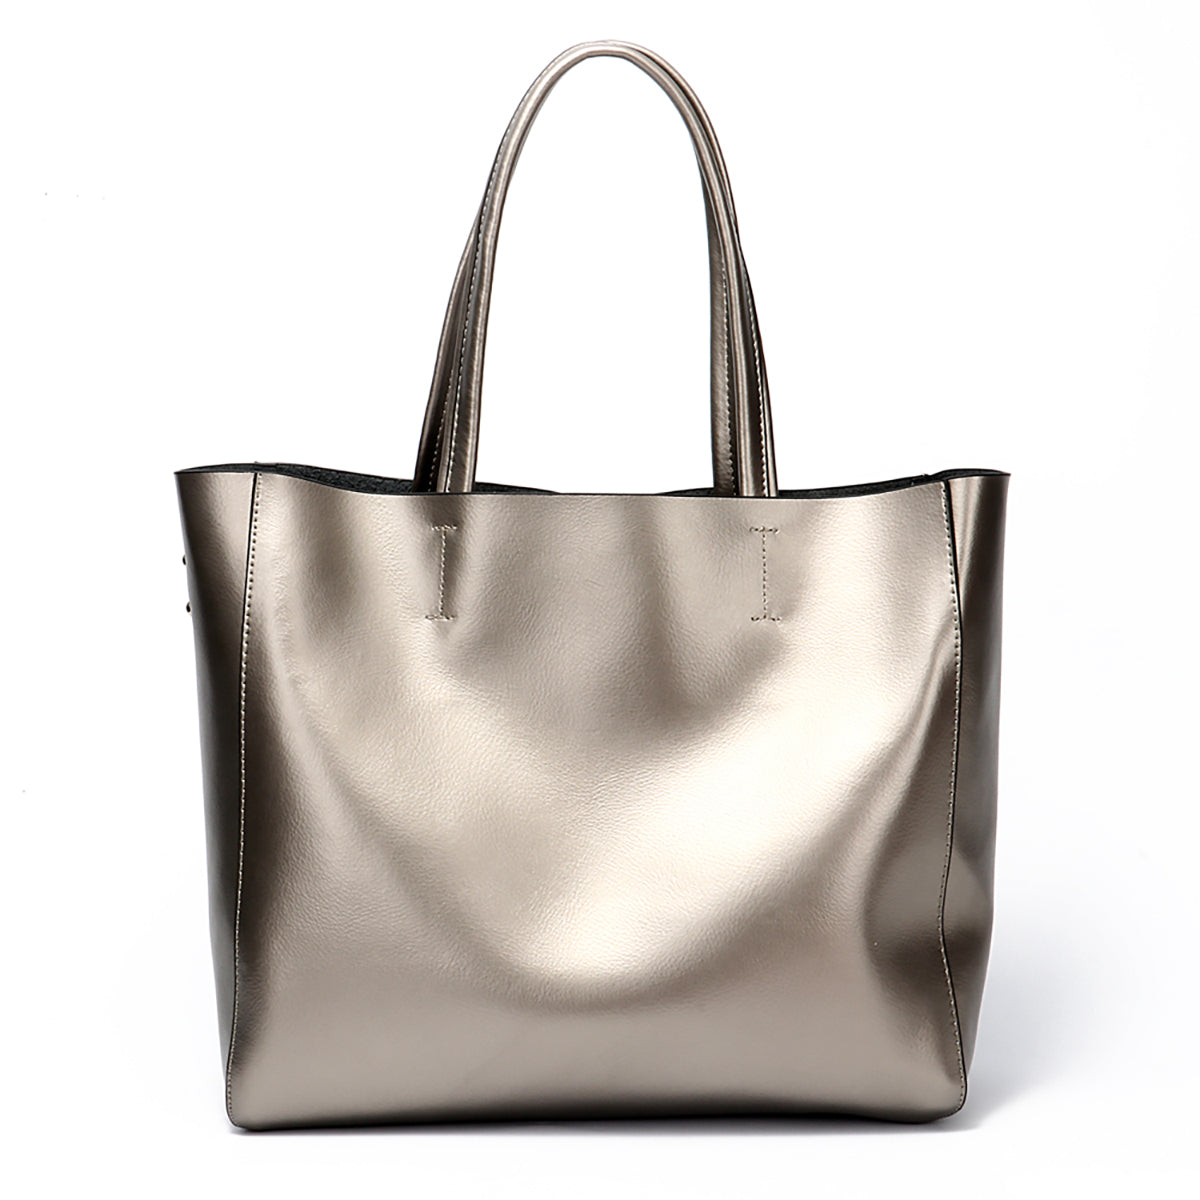 MDBM Toul Luxe Metallic Leather Tote Bag